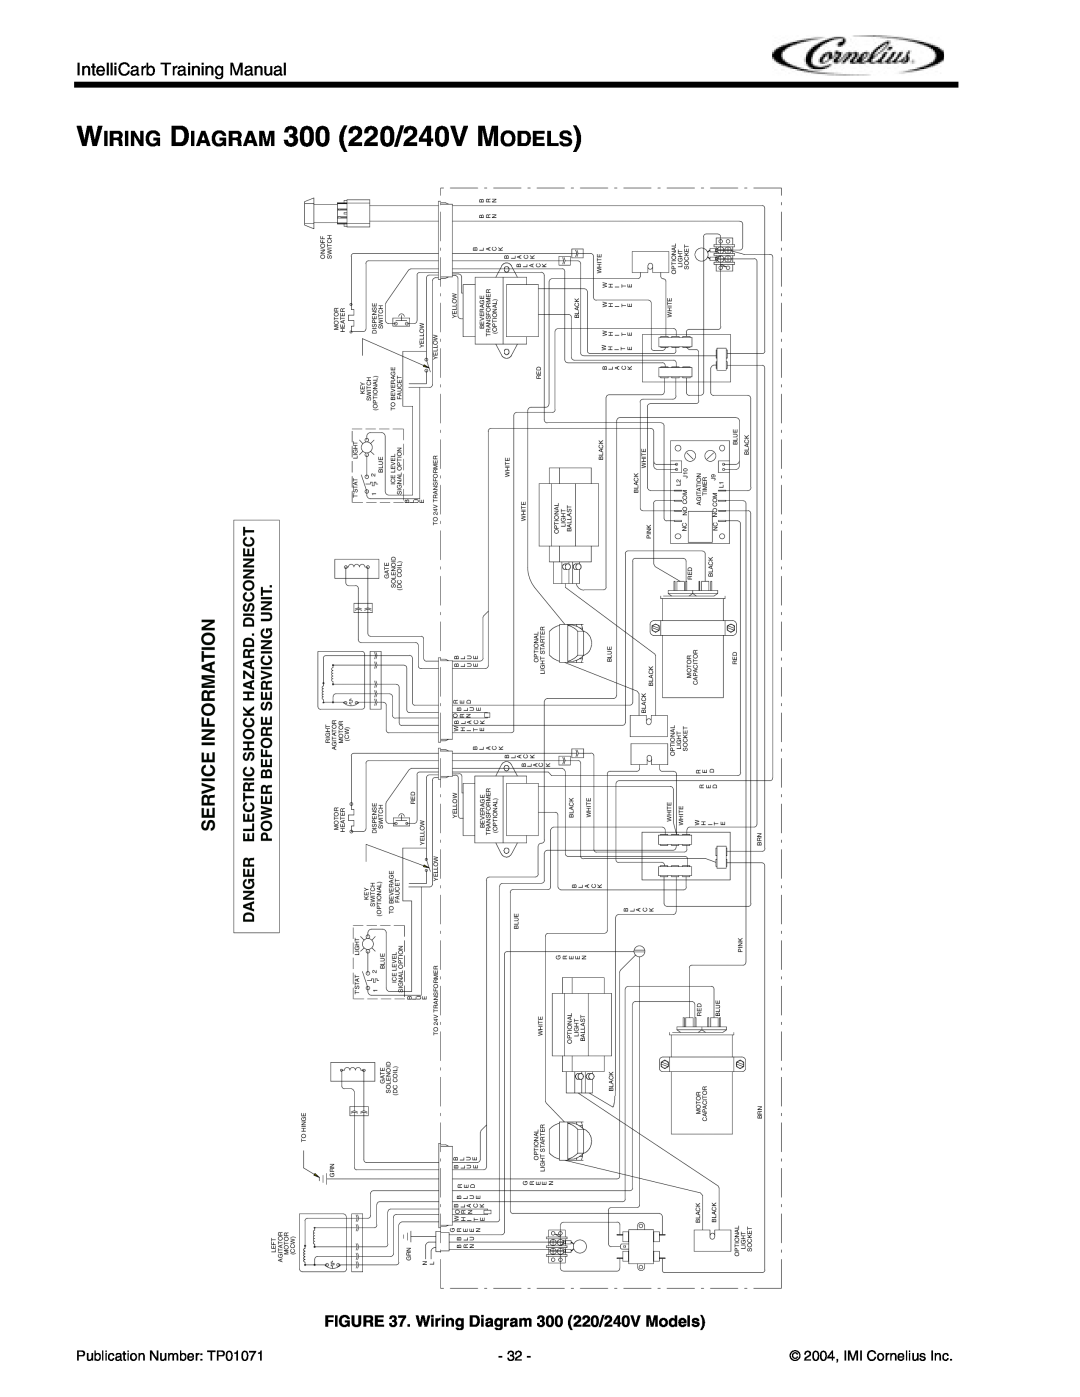 Cornelius Cold Beverage Dispenser manual 220/240V MODELS, Wiring Diagram, Service Information, IntelliCarb Training Manual 